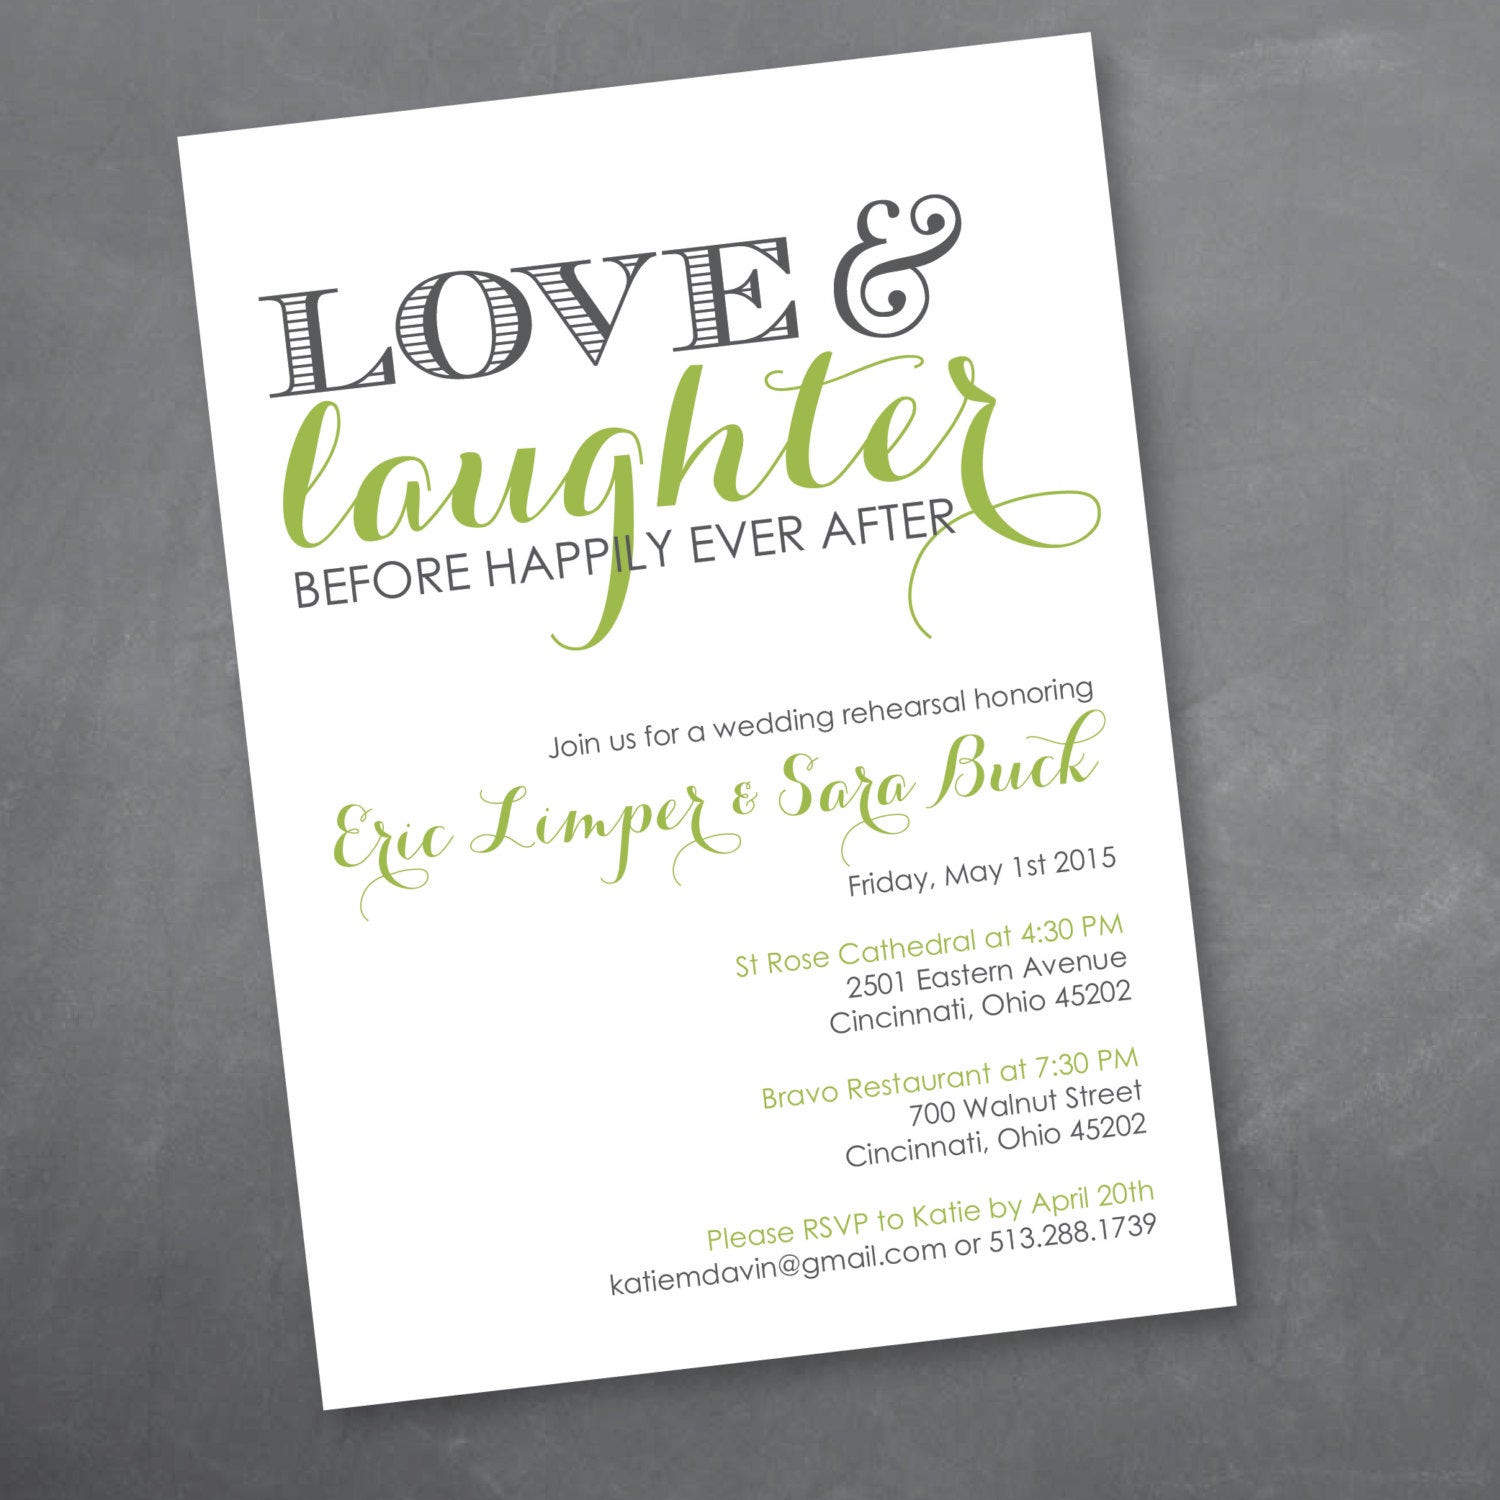 Wedding Rehearsal Invites
 Love and Laughter Rehearsal Dinner Invitation Digital Design